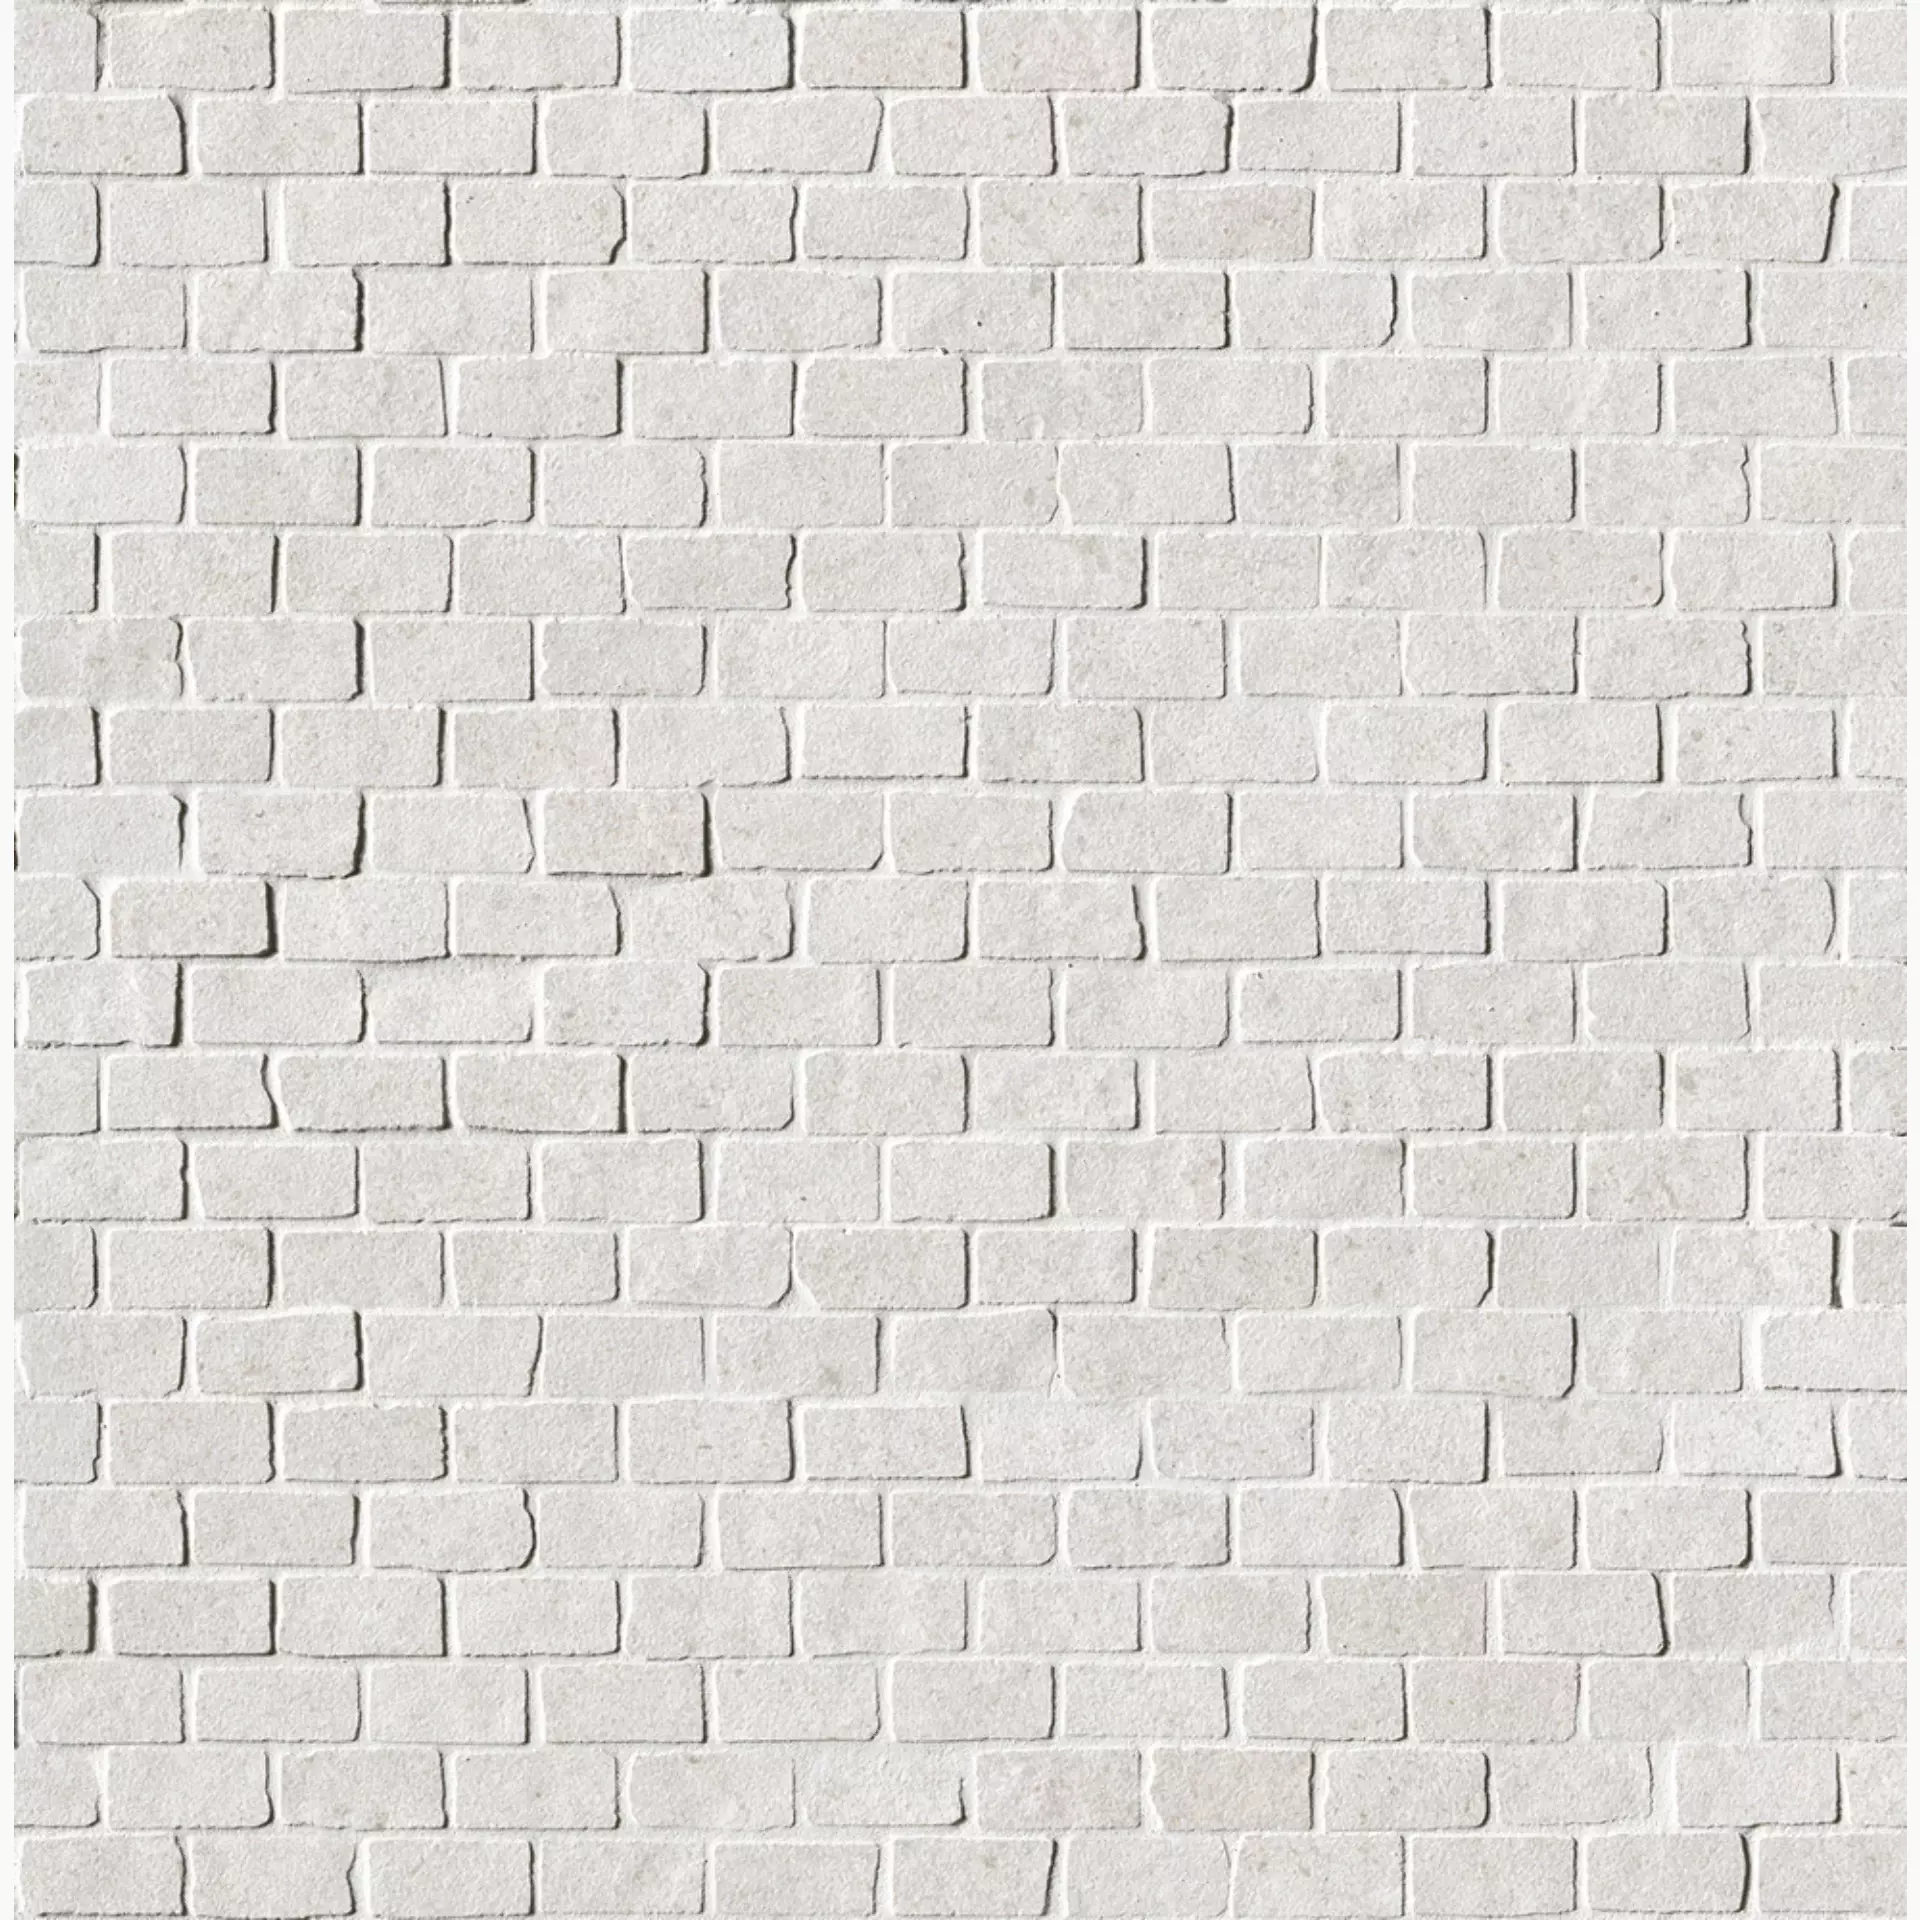 FAP Nux White Anticato White fOR1 antiquiert 30,5x30,5cm Mosaik Brick